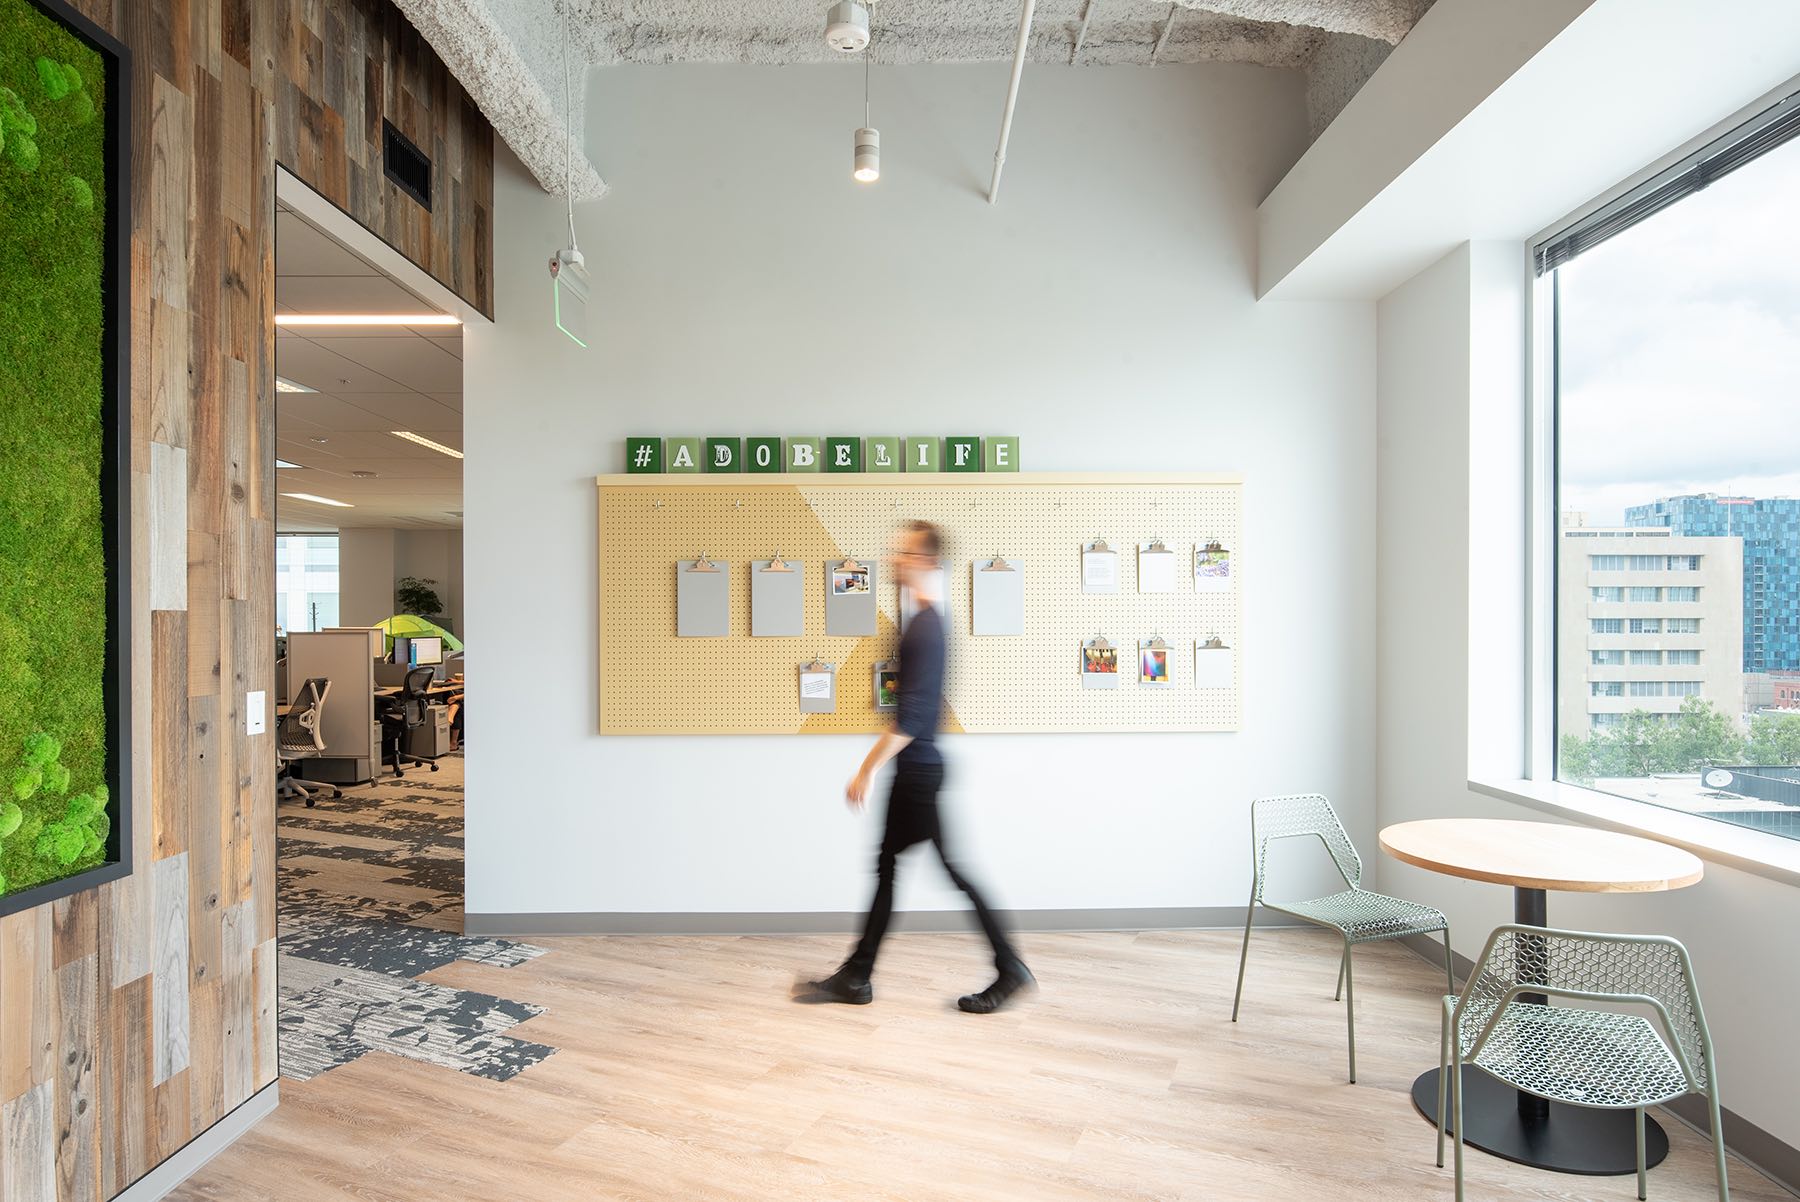 A Look Inside Adobe’s Modern San Jose Headquarters